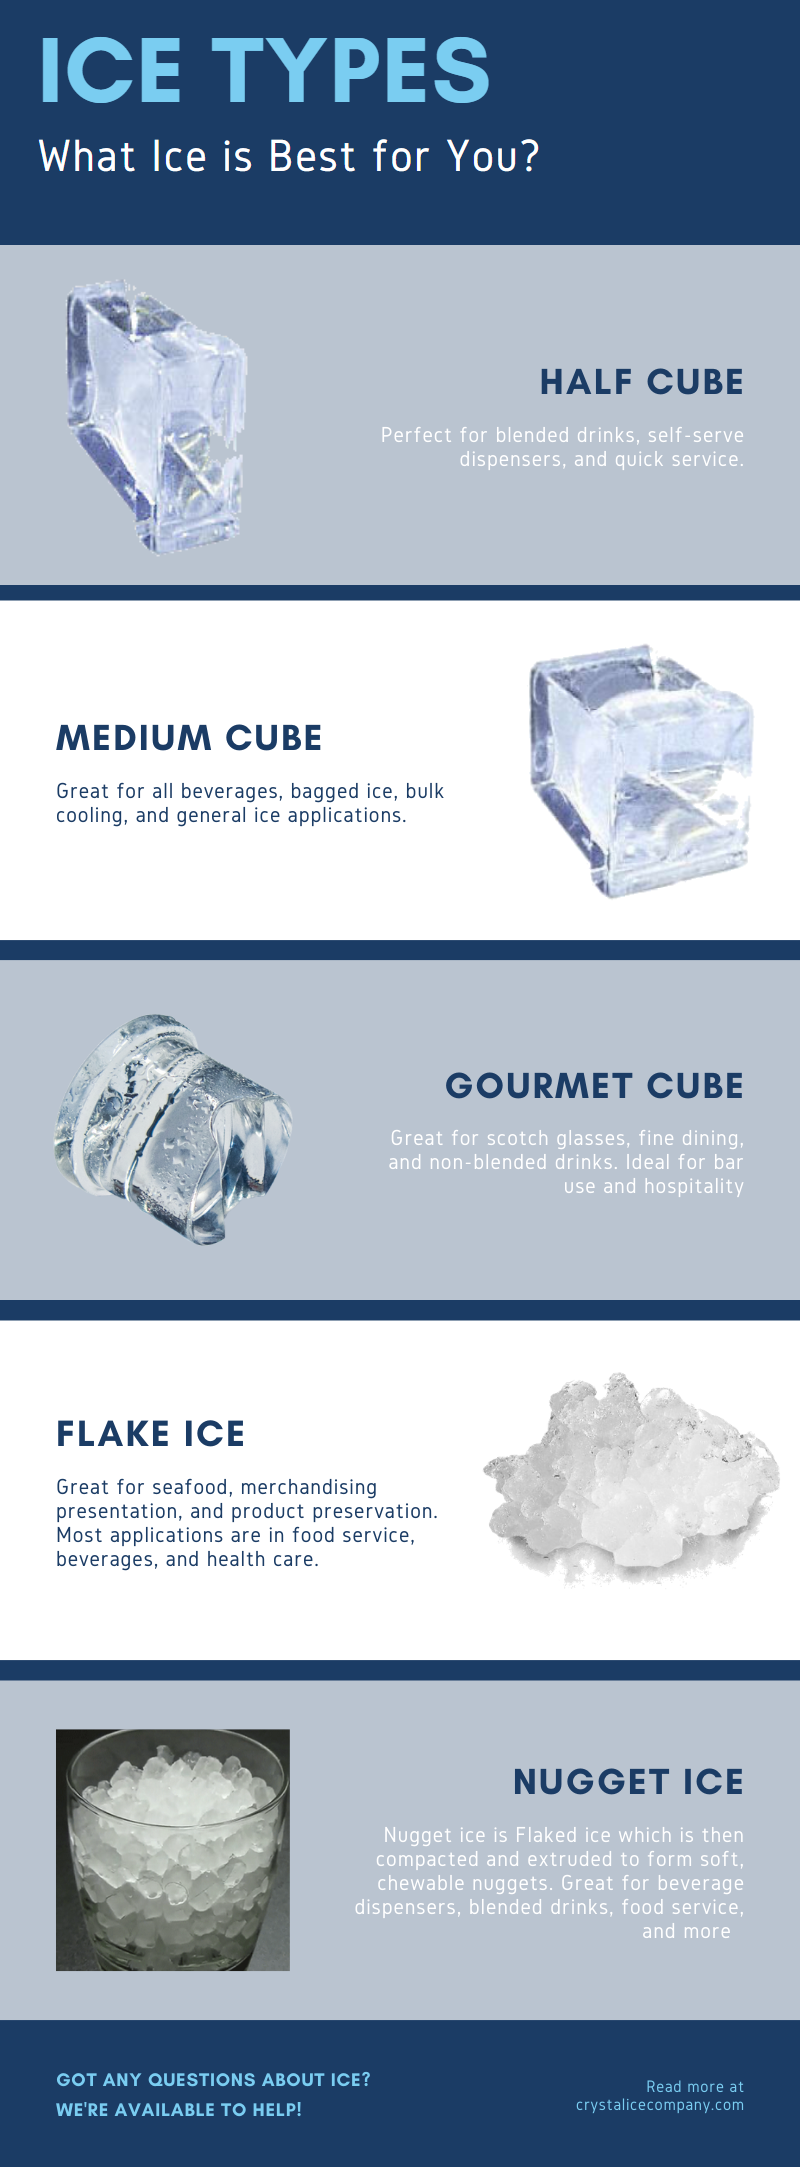 ice types image